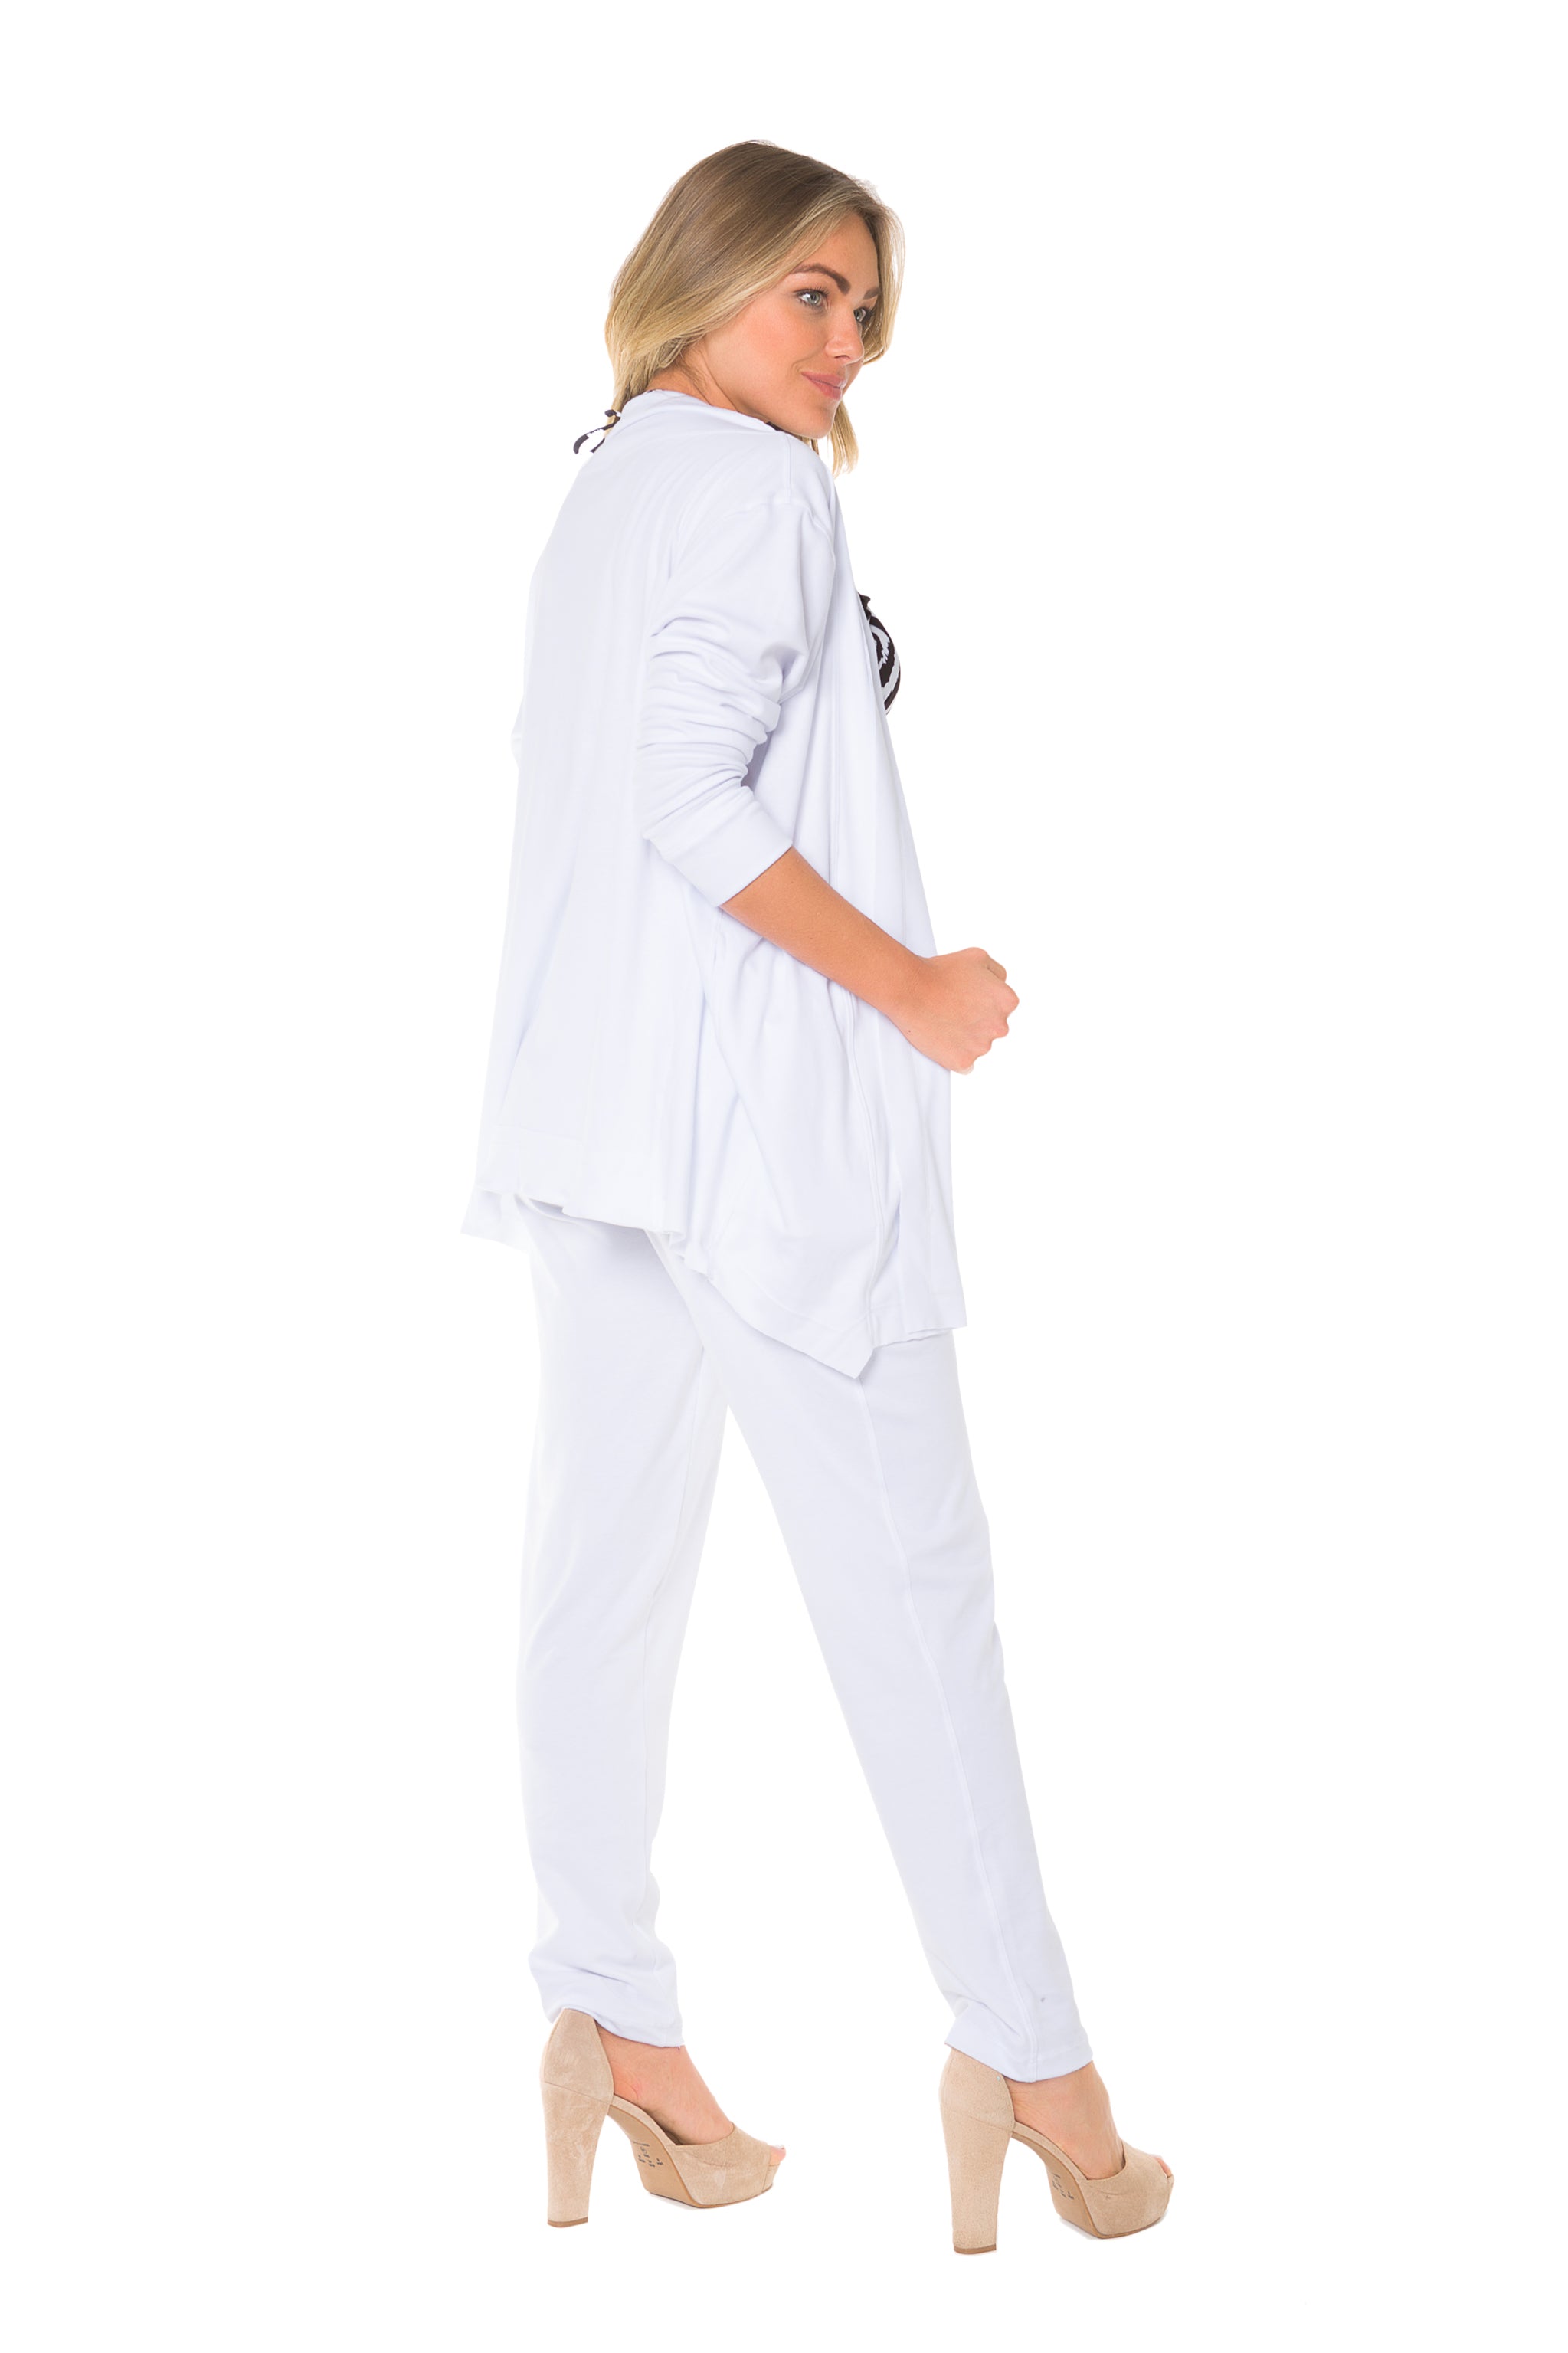 Camilla White Pants In Egyptian Organic Cotton - Lybethras Swimwear